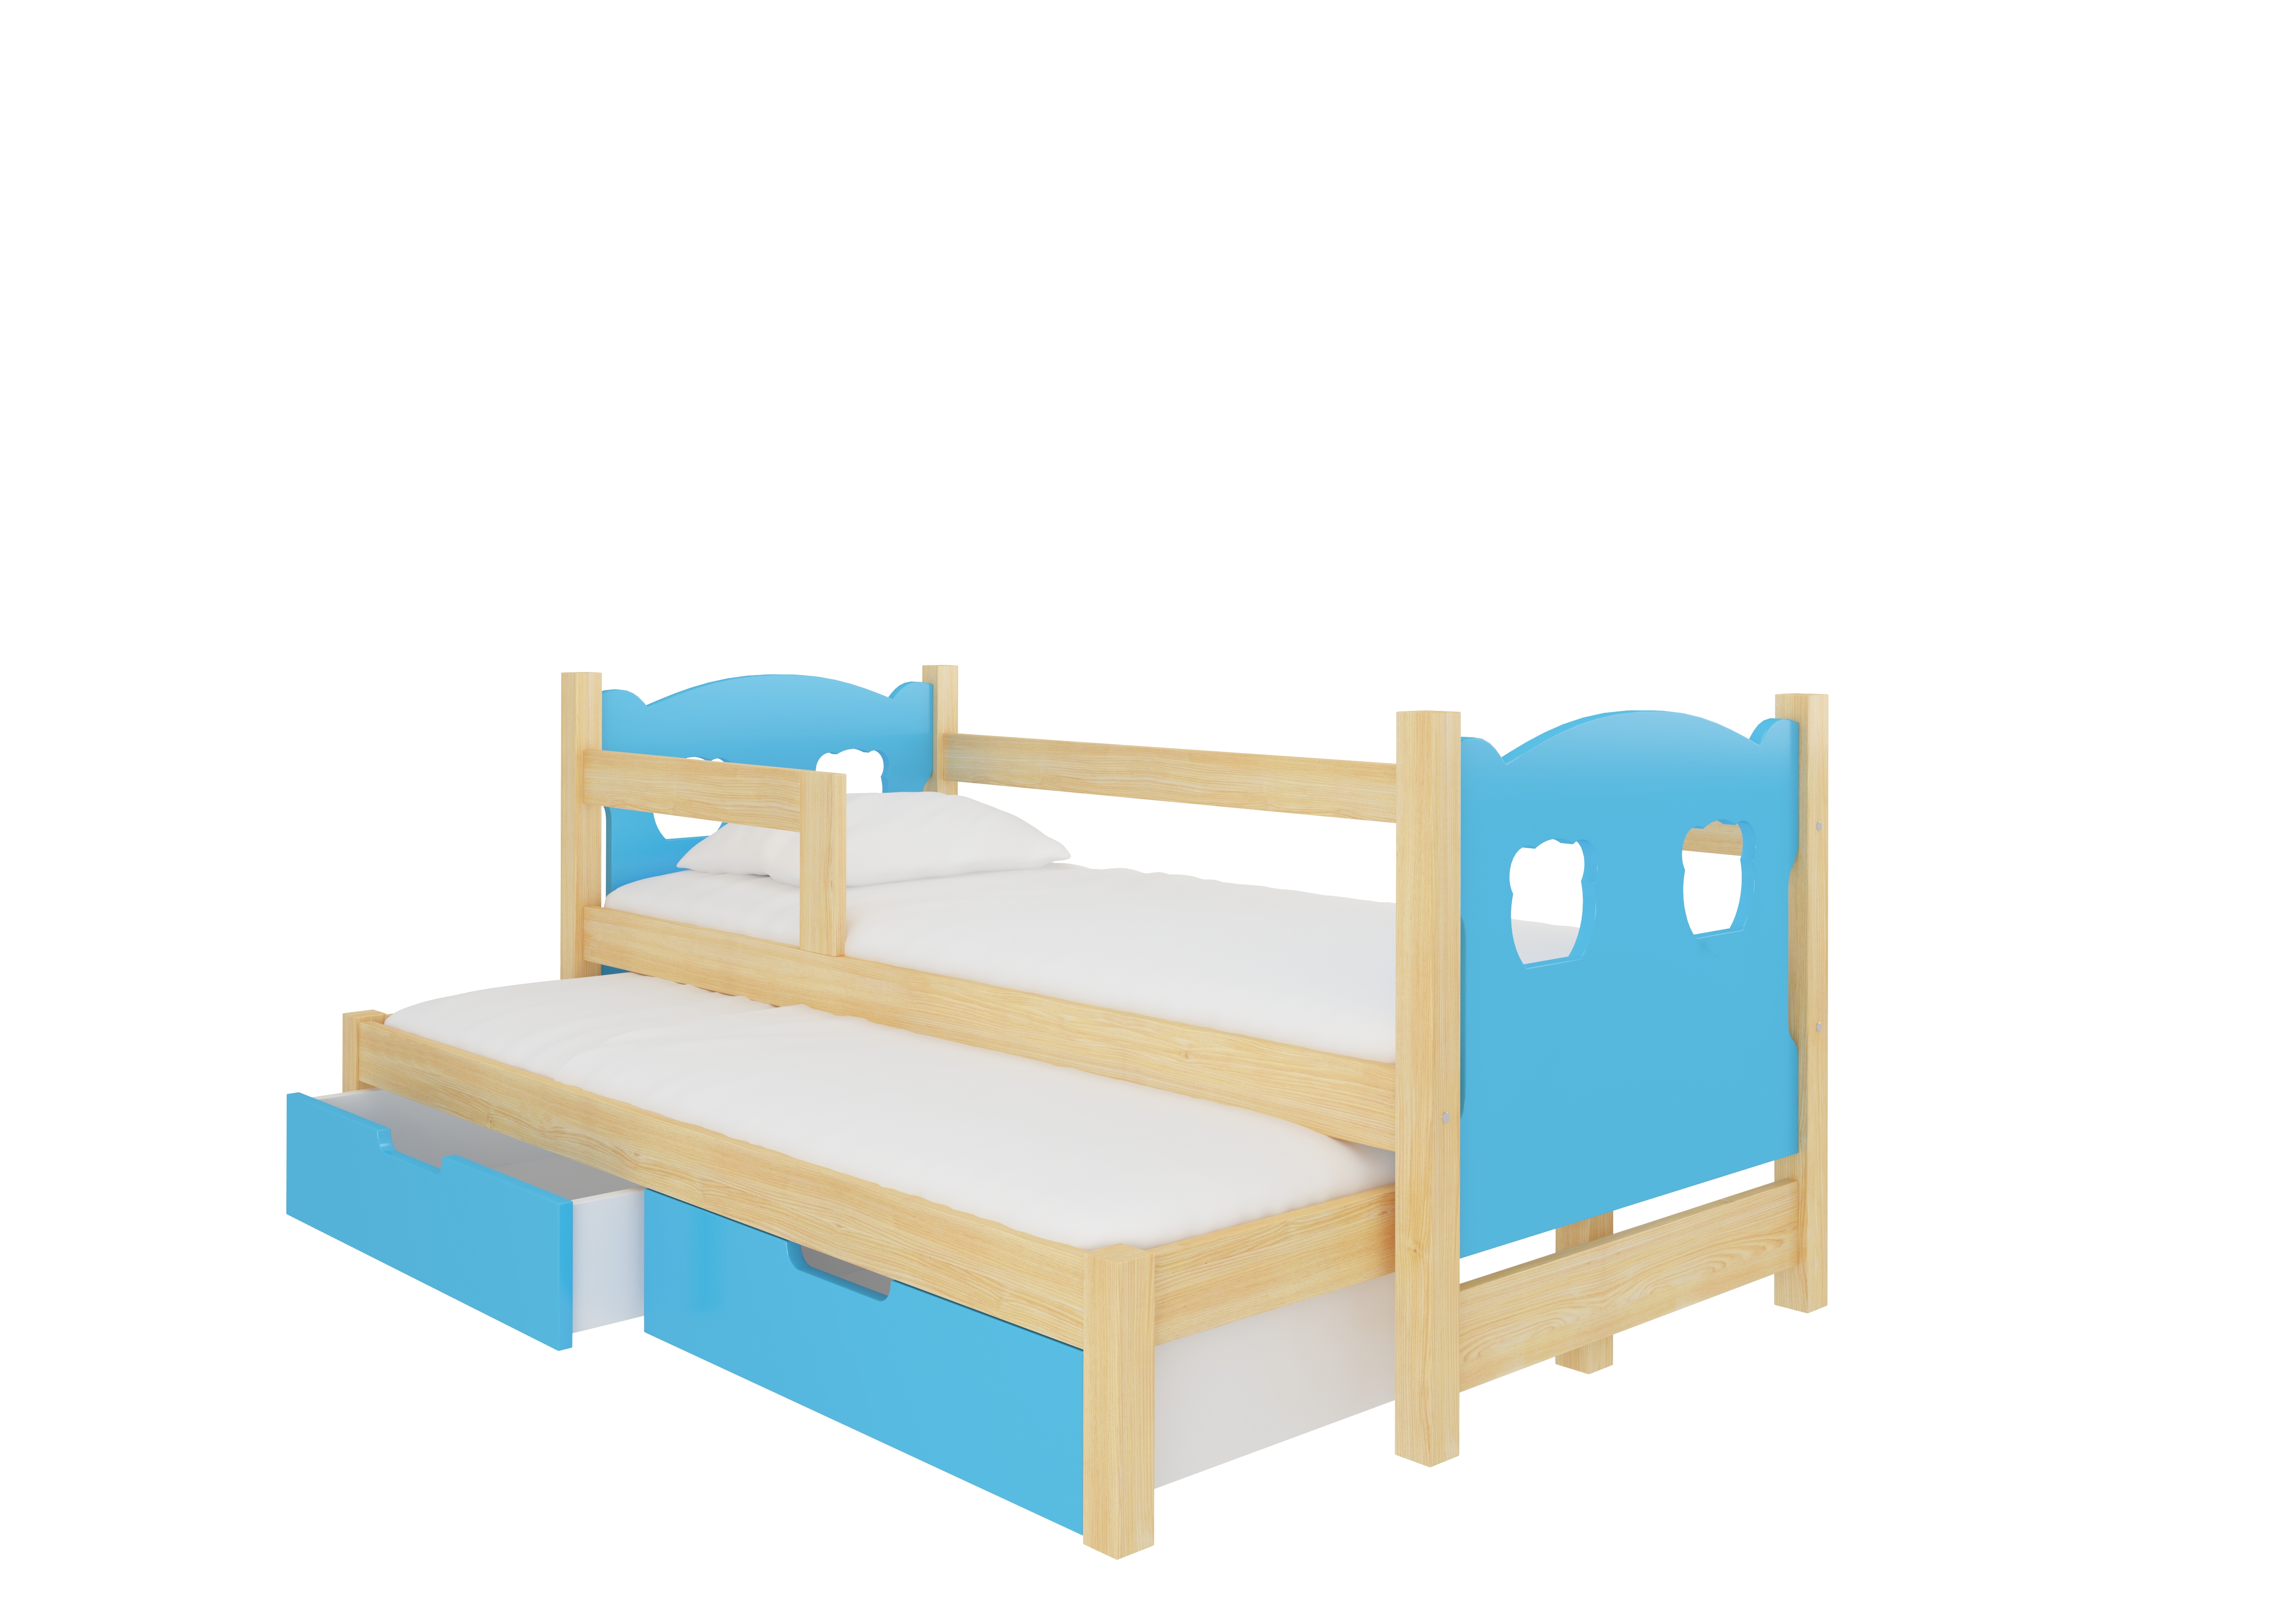 Dětská postel Campos s přistýlkou Rám: Borovice bílá, Čela a šuplíky: Modrá - Borovice bílá,Modrá